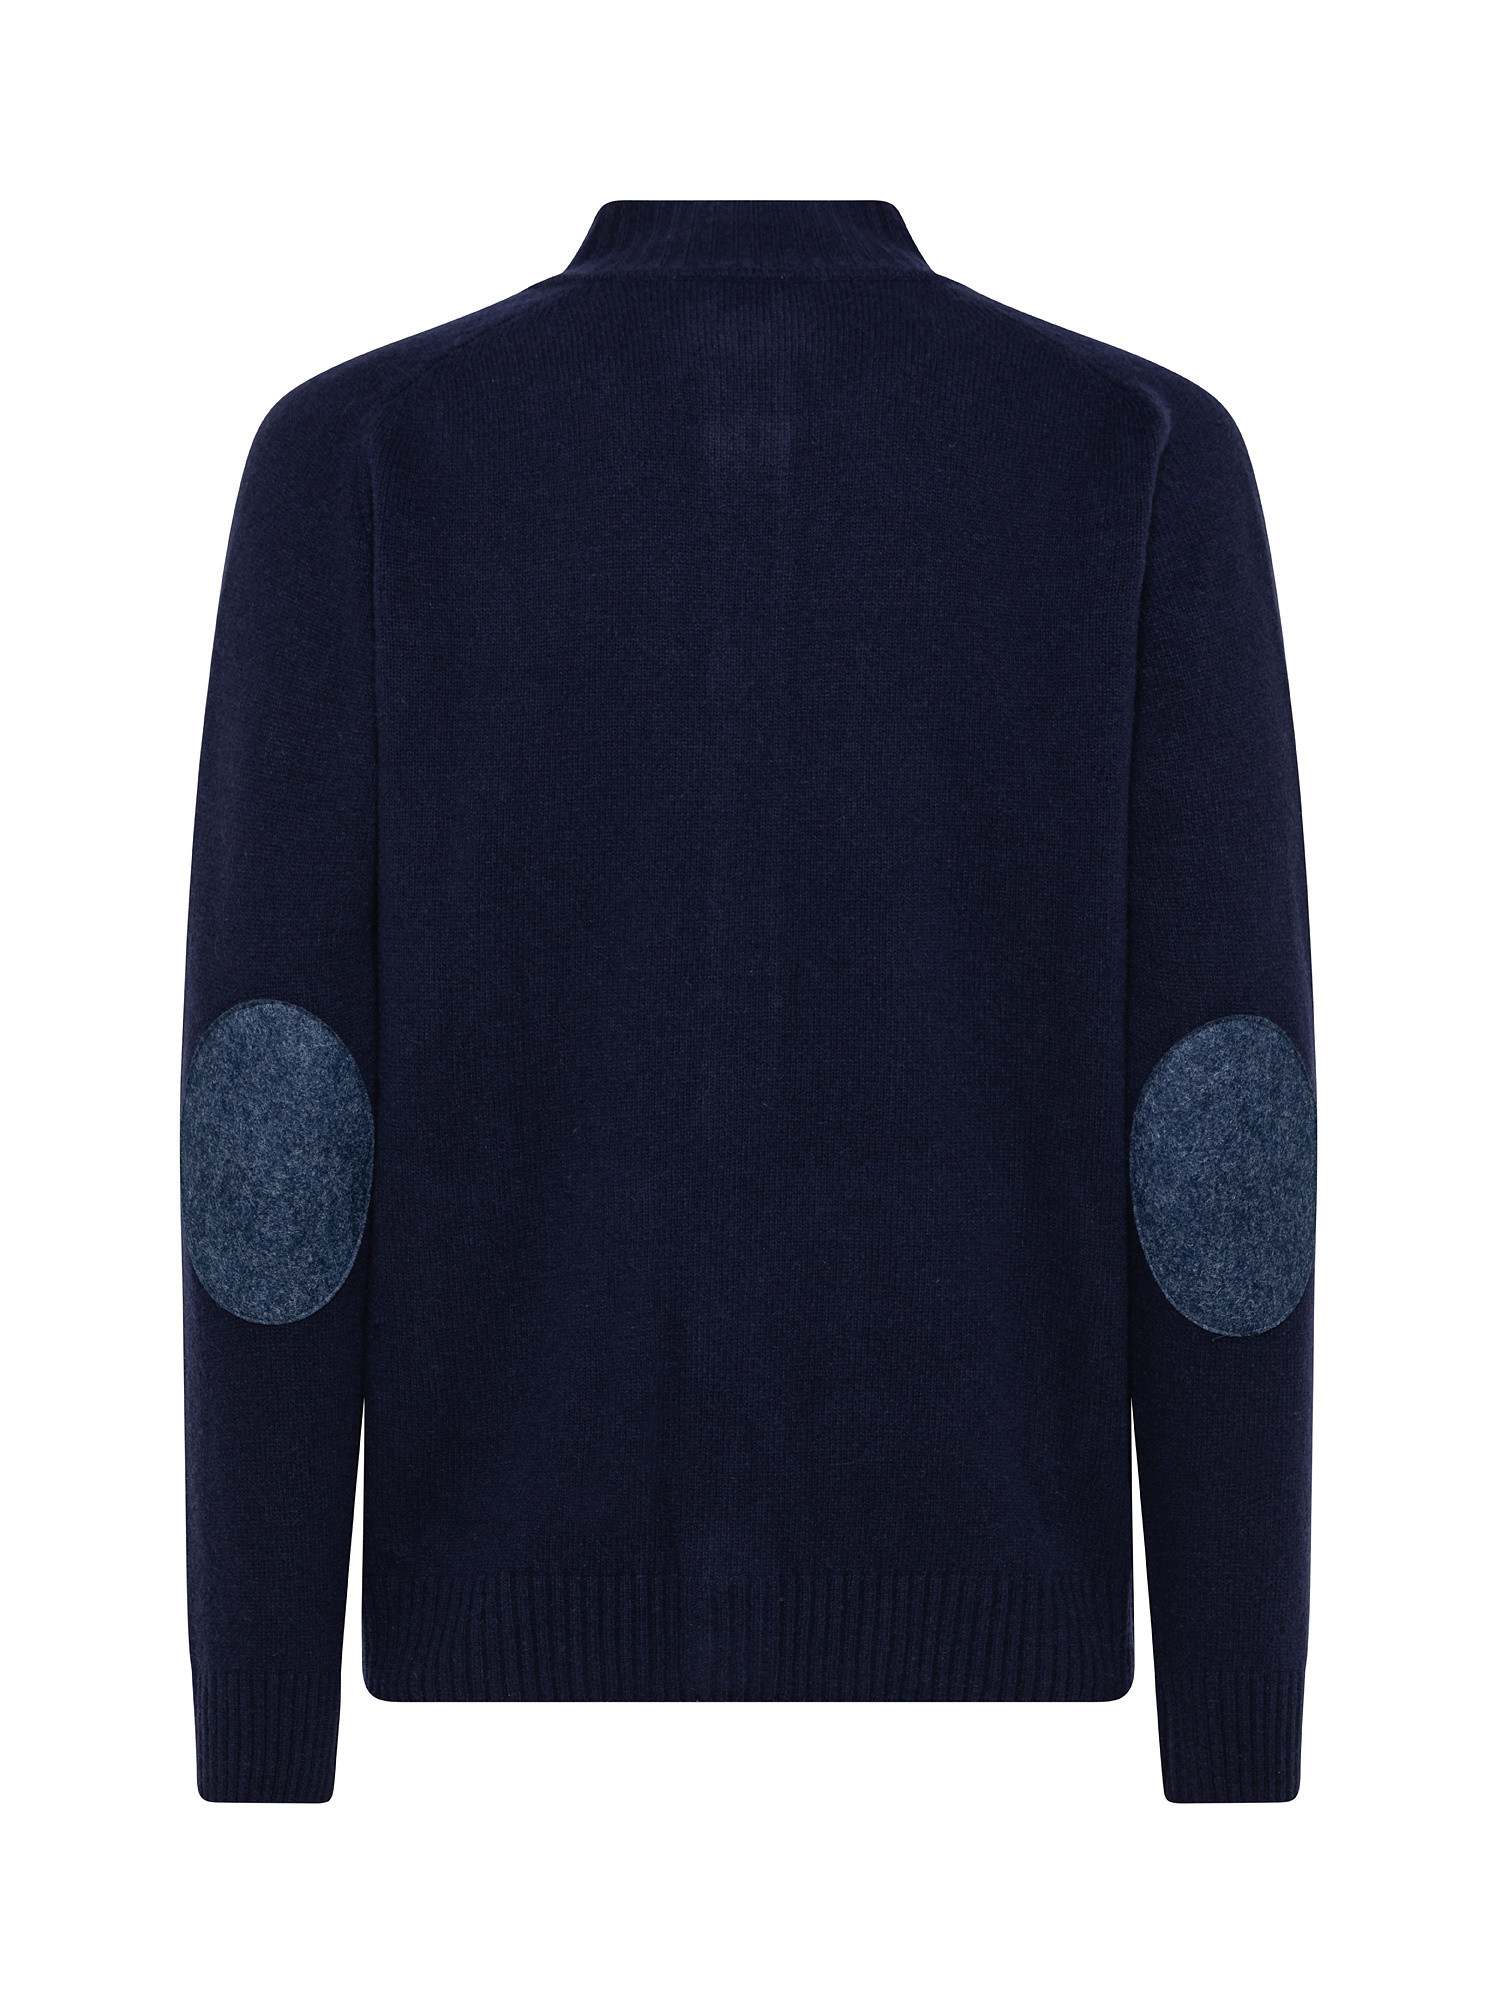 Cardigan misto lana con bottoni, Blu scuro, large image number 1